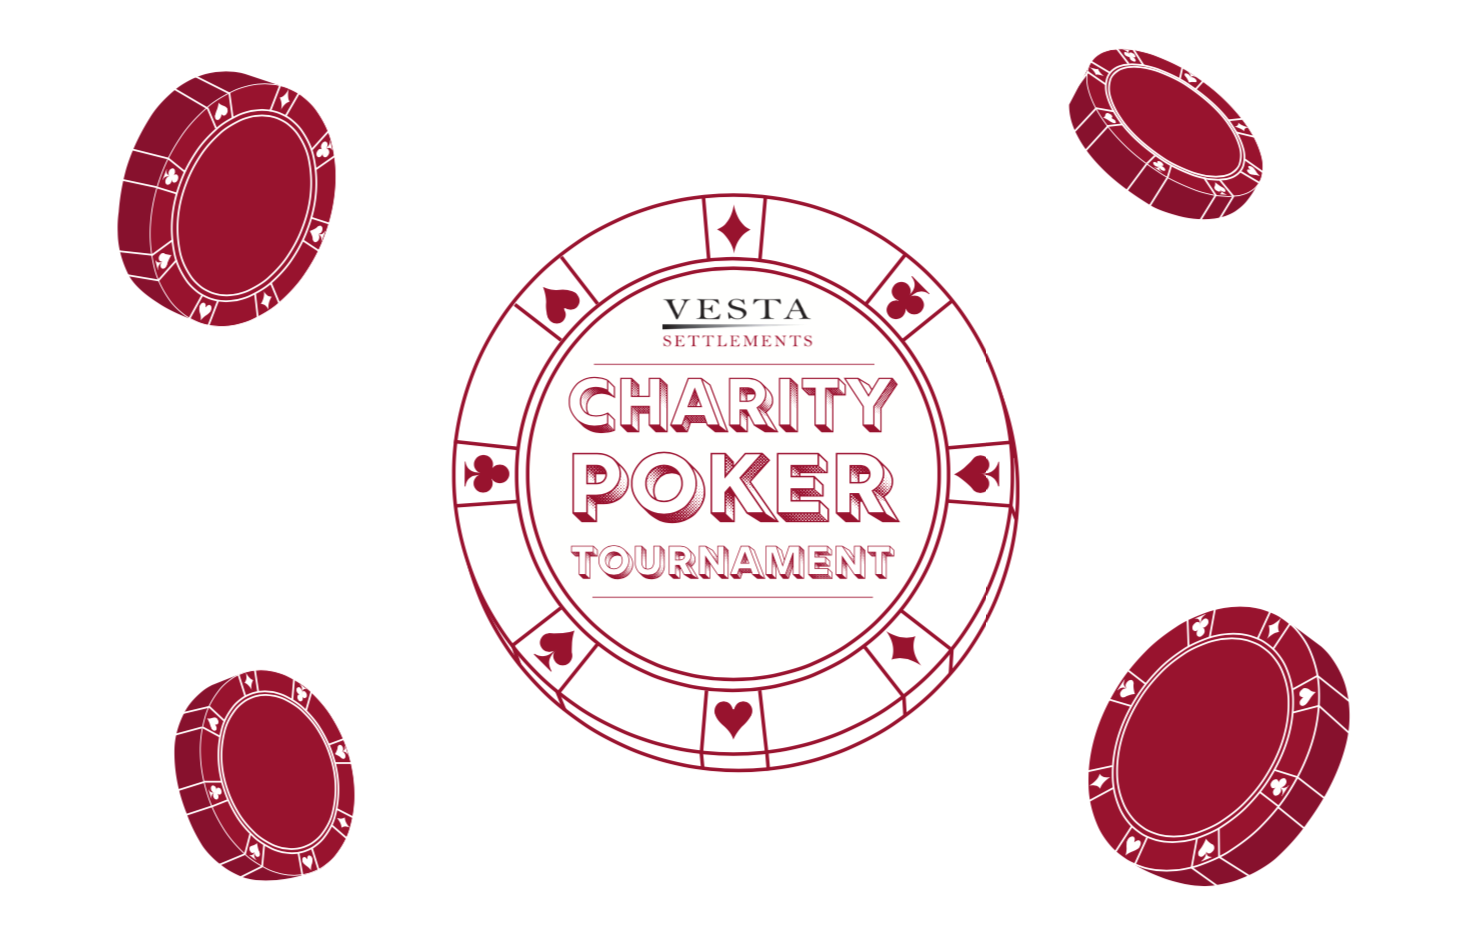 Charity Poker Tournament with Vesta Settlements